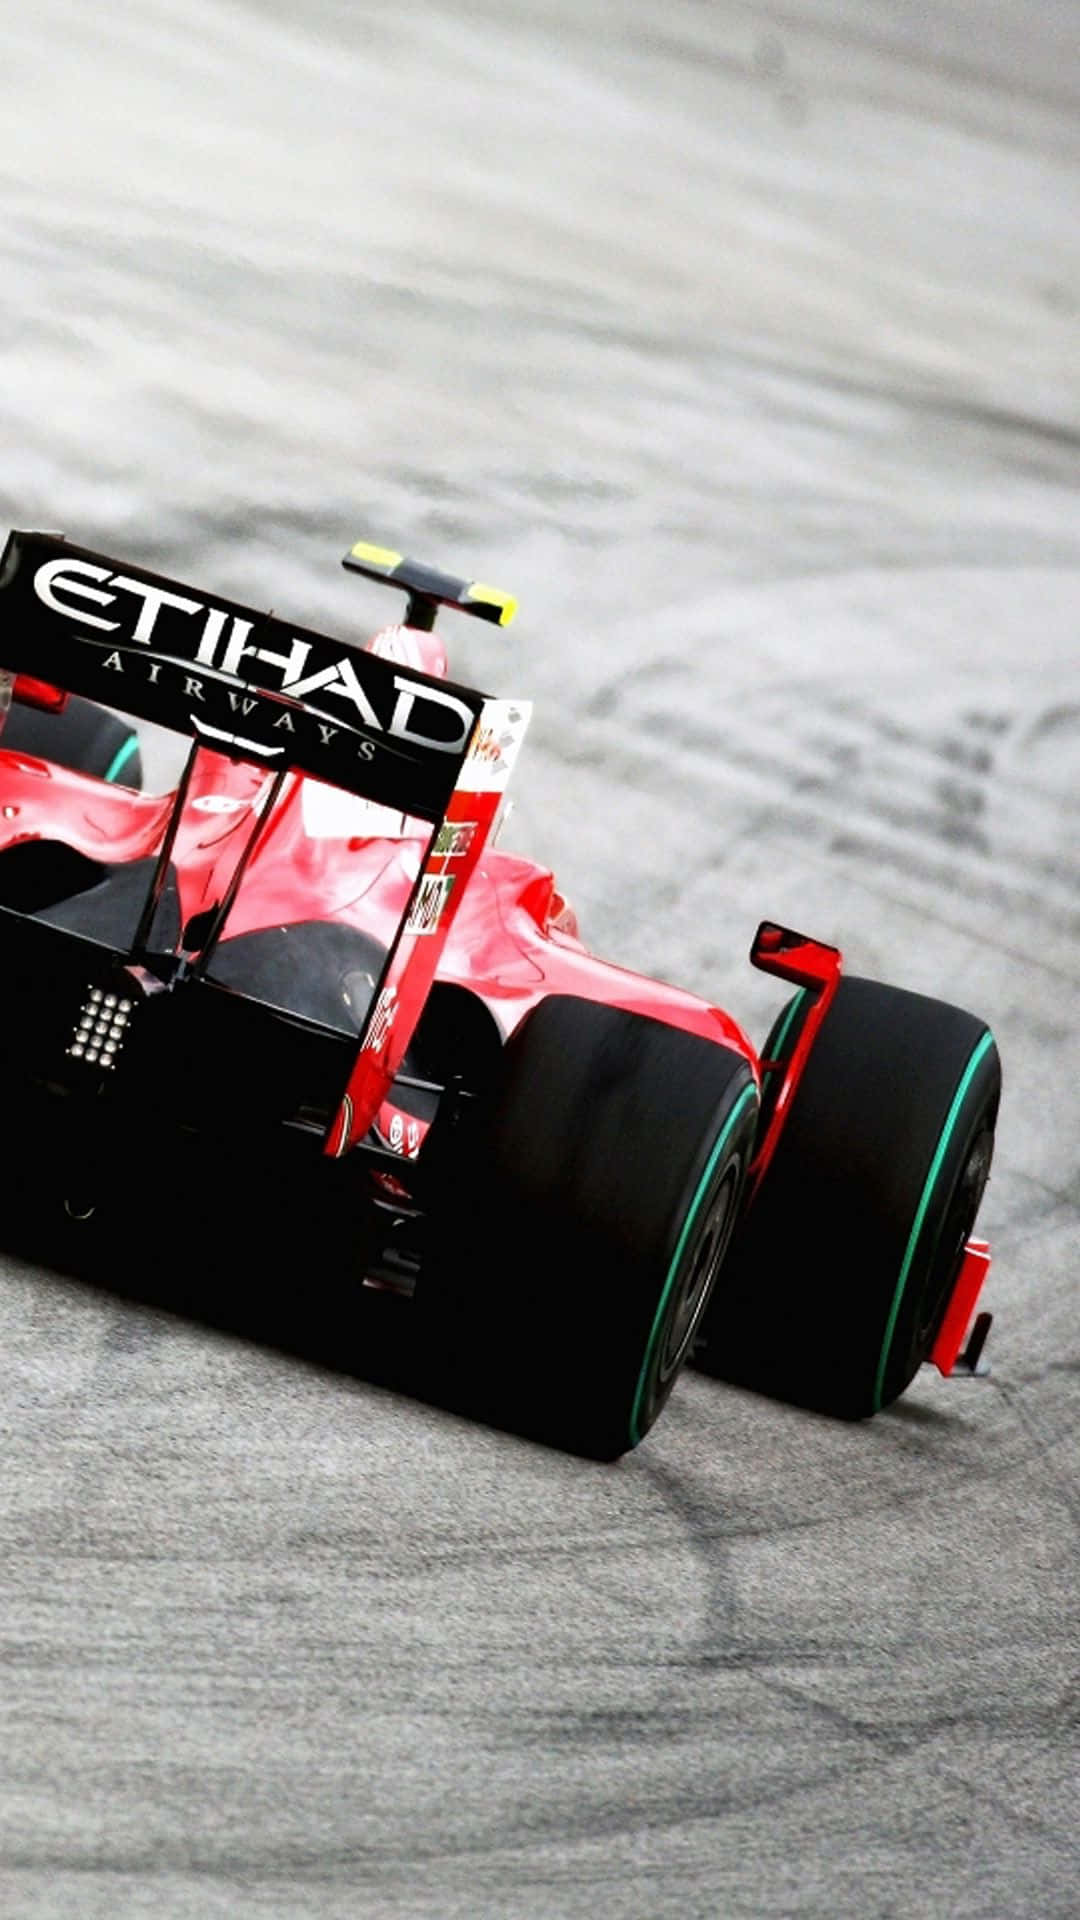 Pixel 3xl F1 2016 Racing Car Background